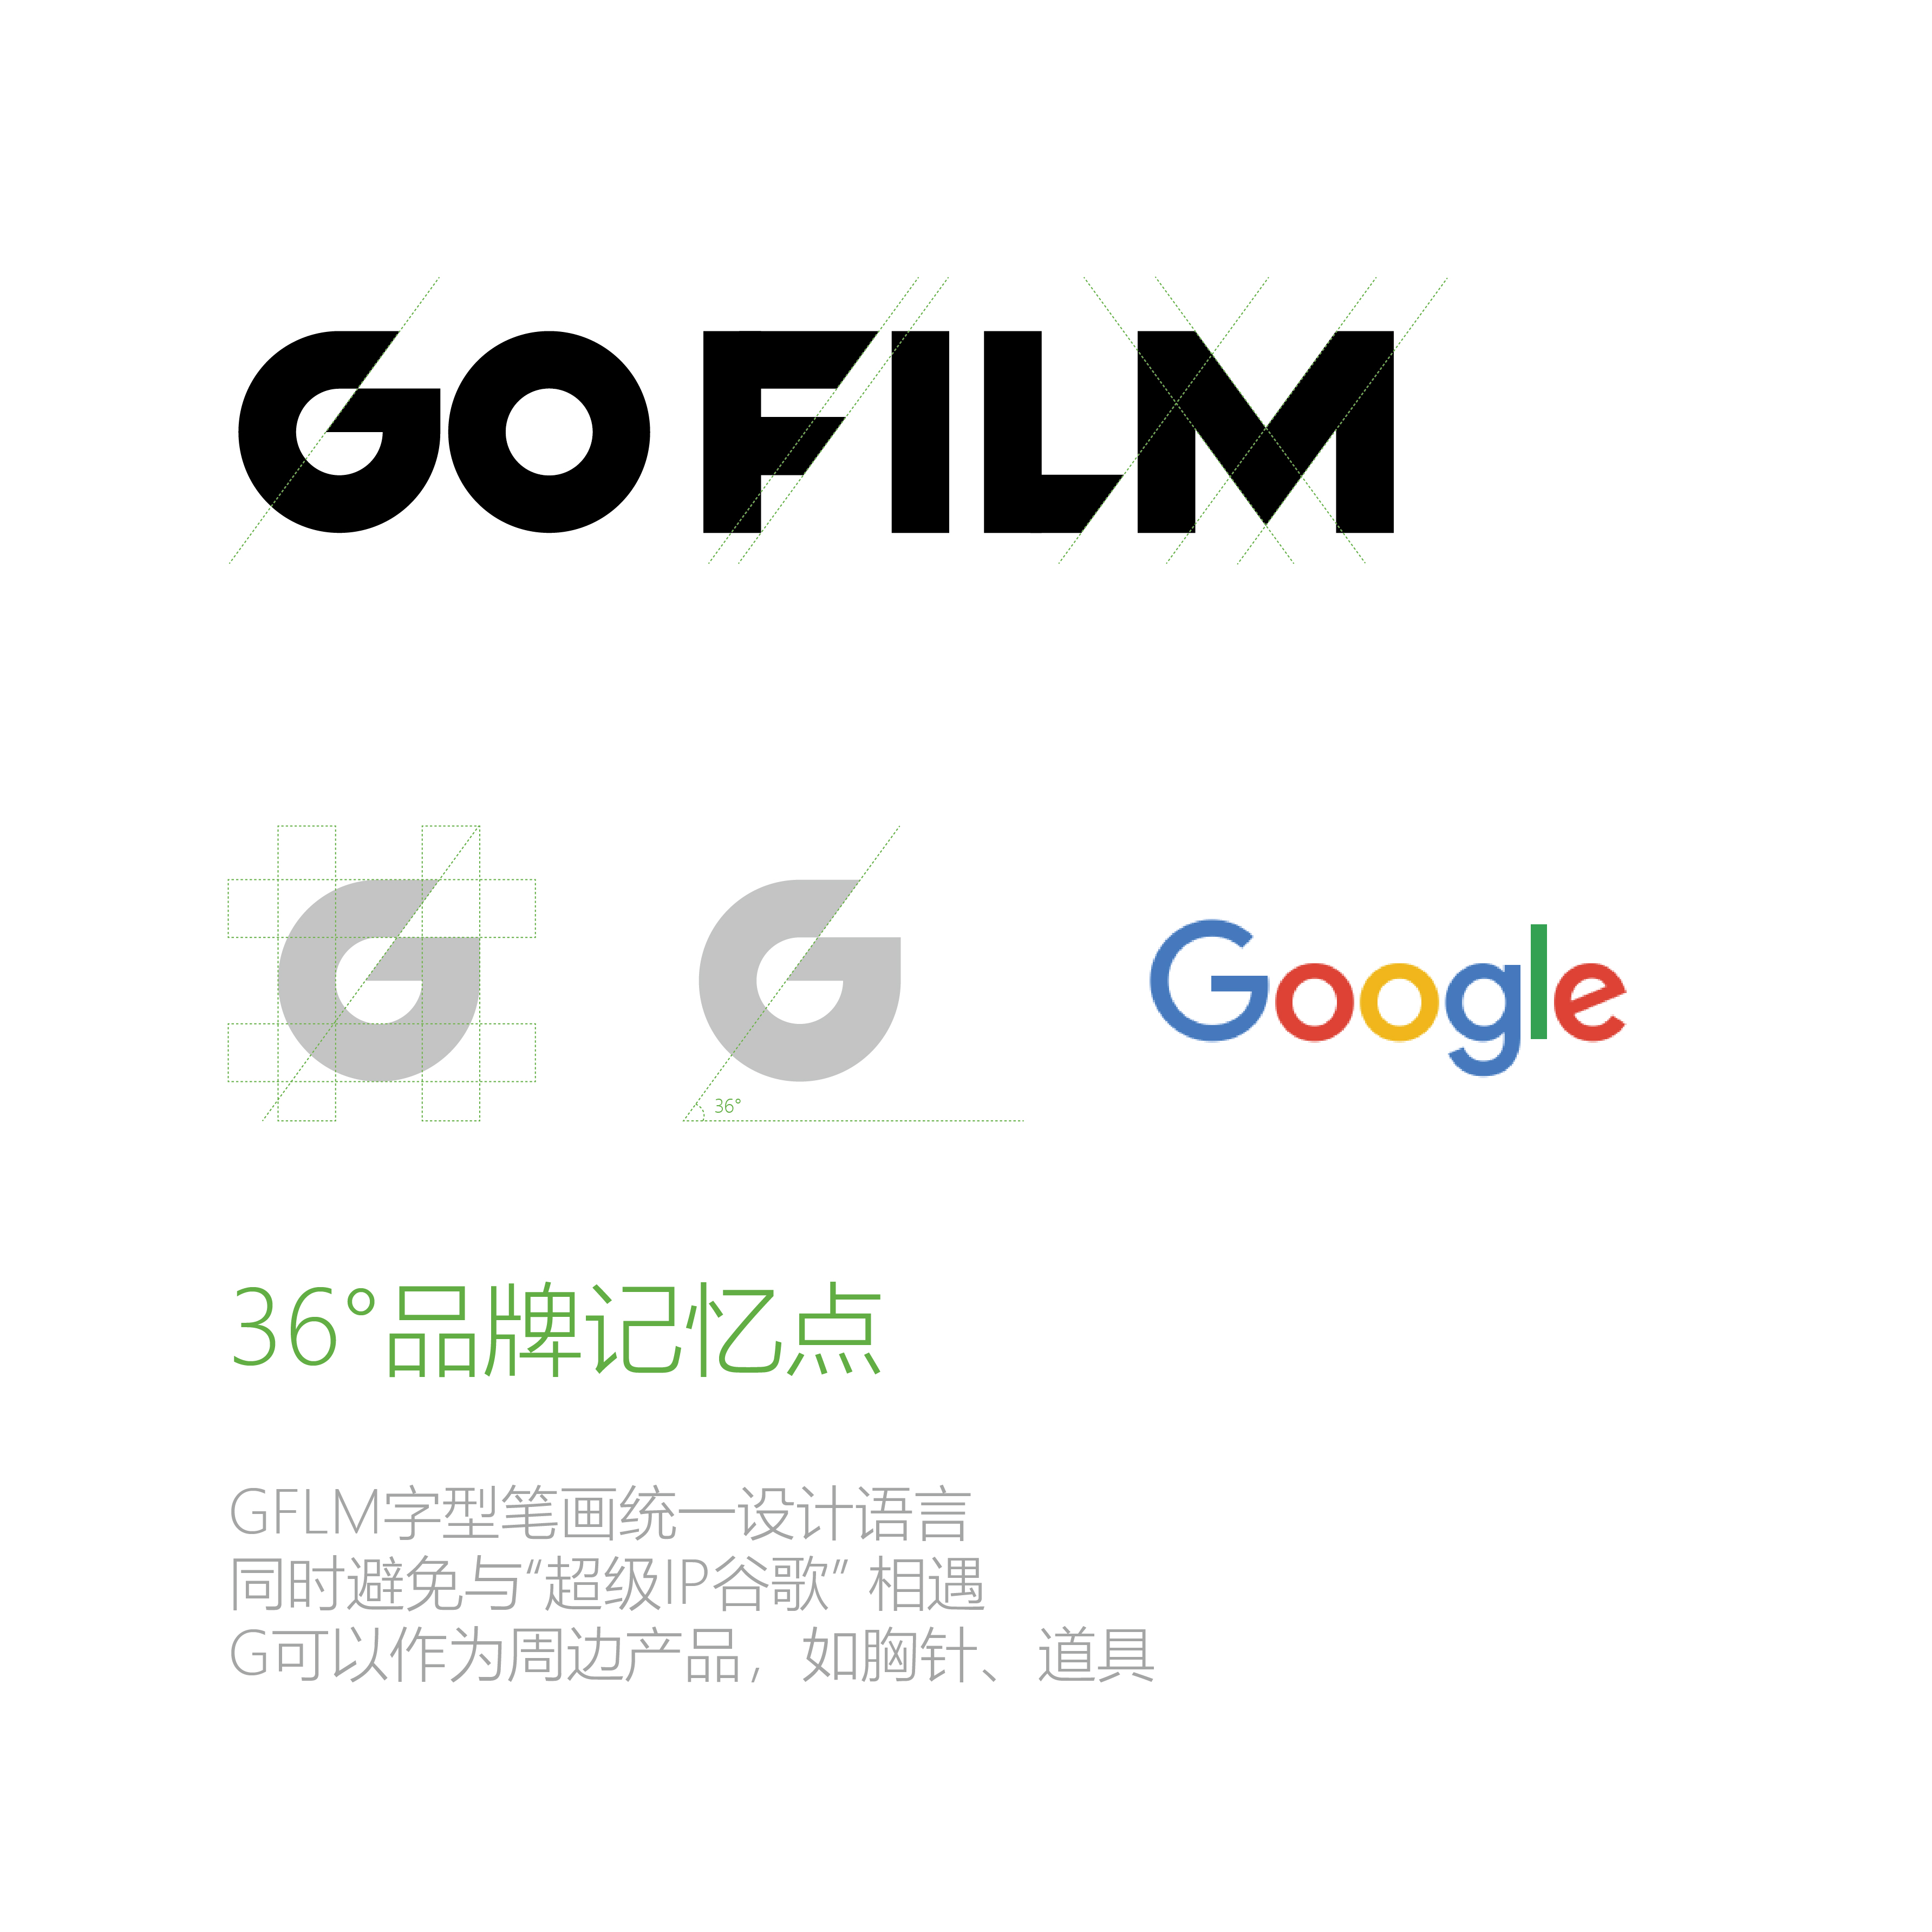 华语电影节logo